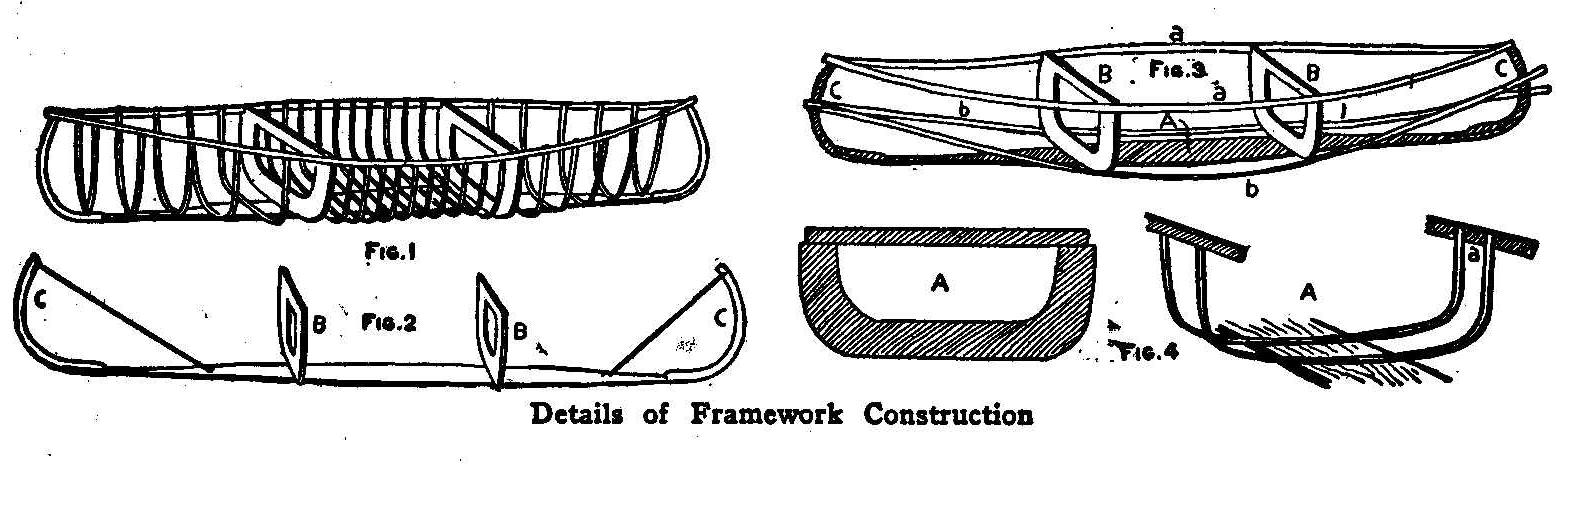 Detail of Framework Construction 